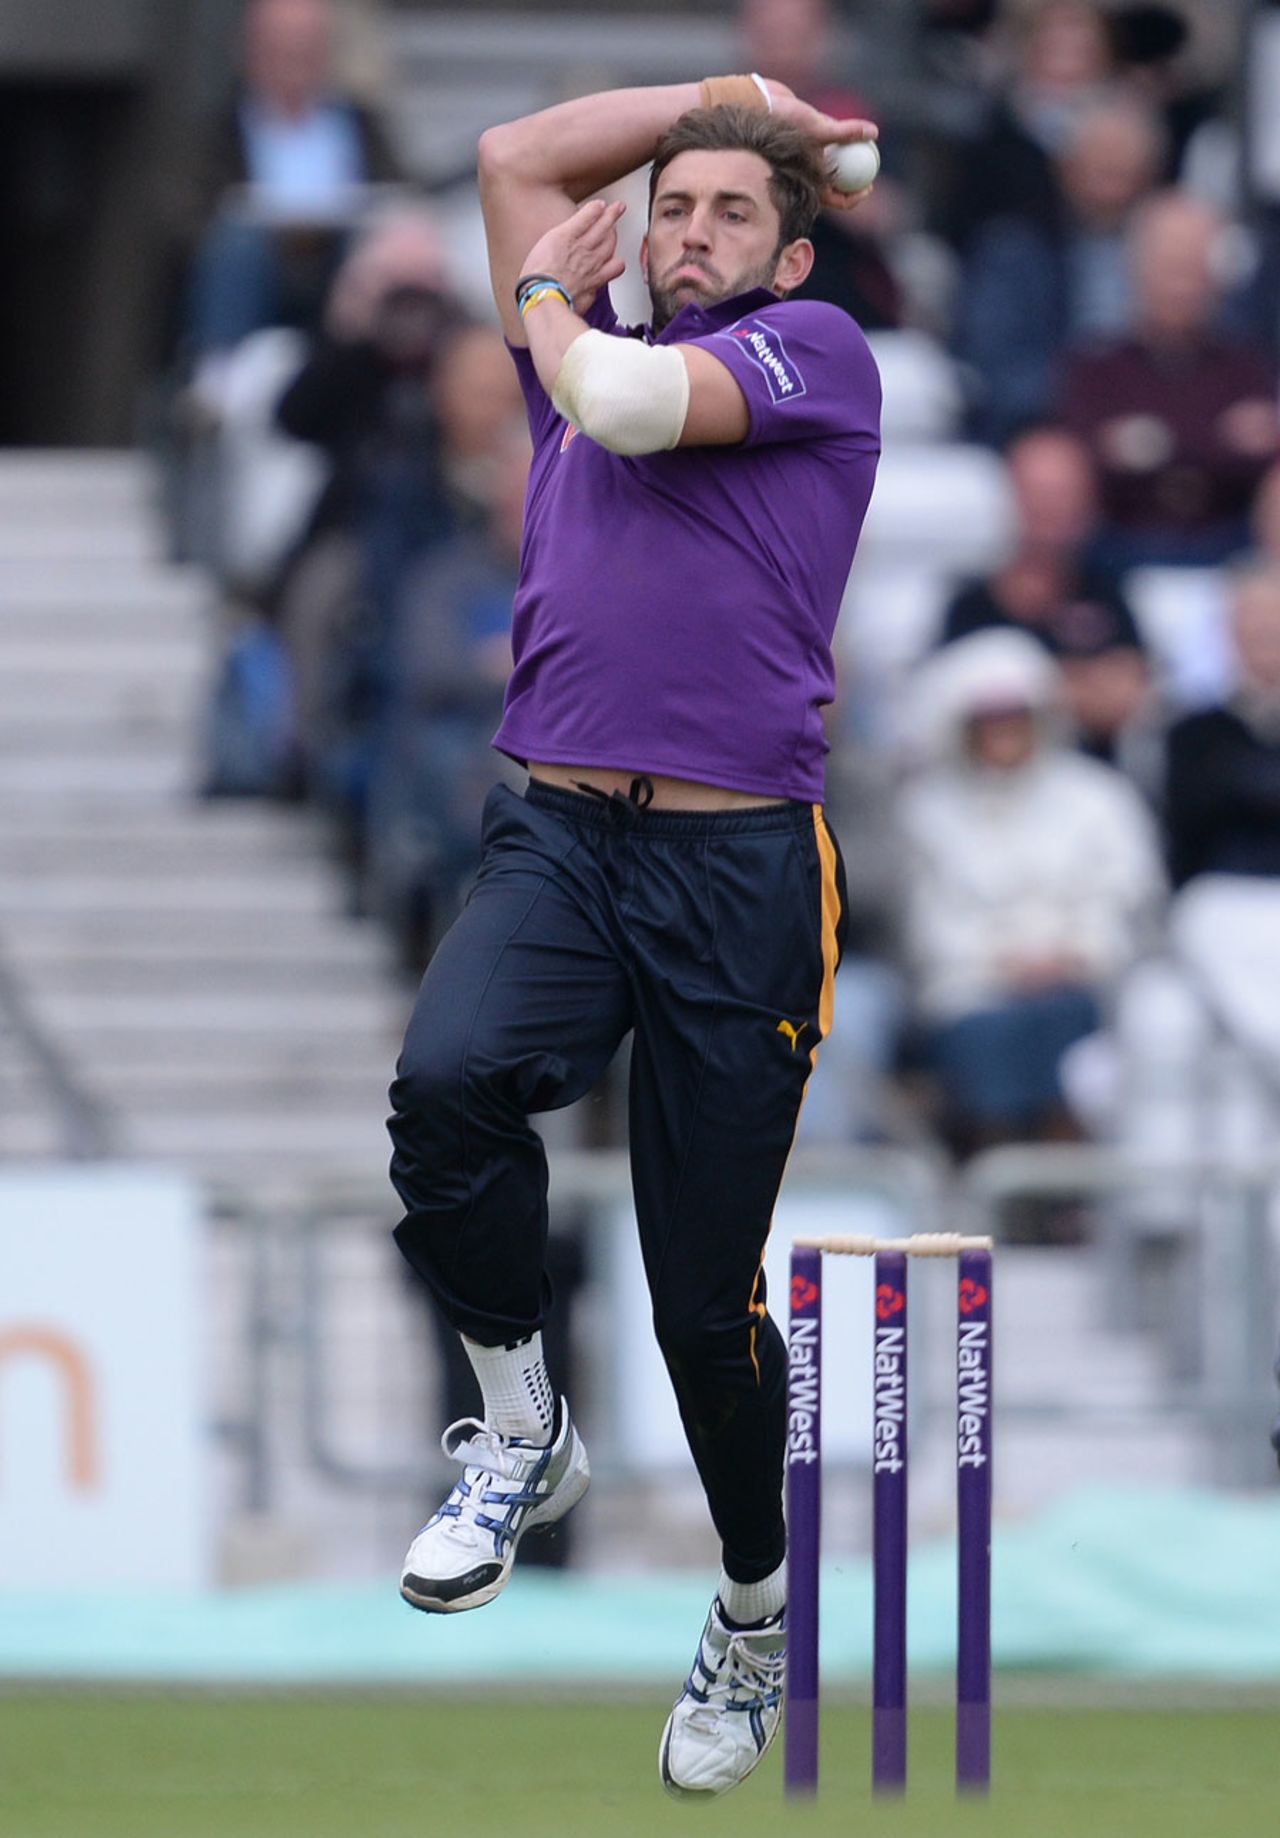 Liam Plunkett removed dangerman Chesney Hughes, Yorkshire v Derbyshire, NatWest T20 Blast, North Division, Headingley, May 30, 2014